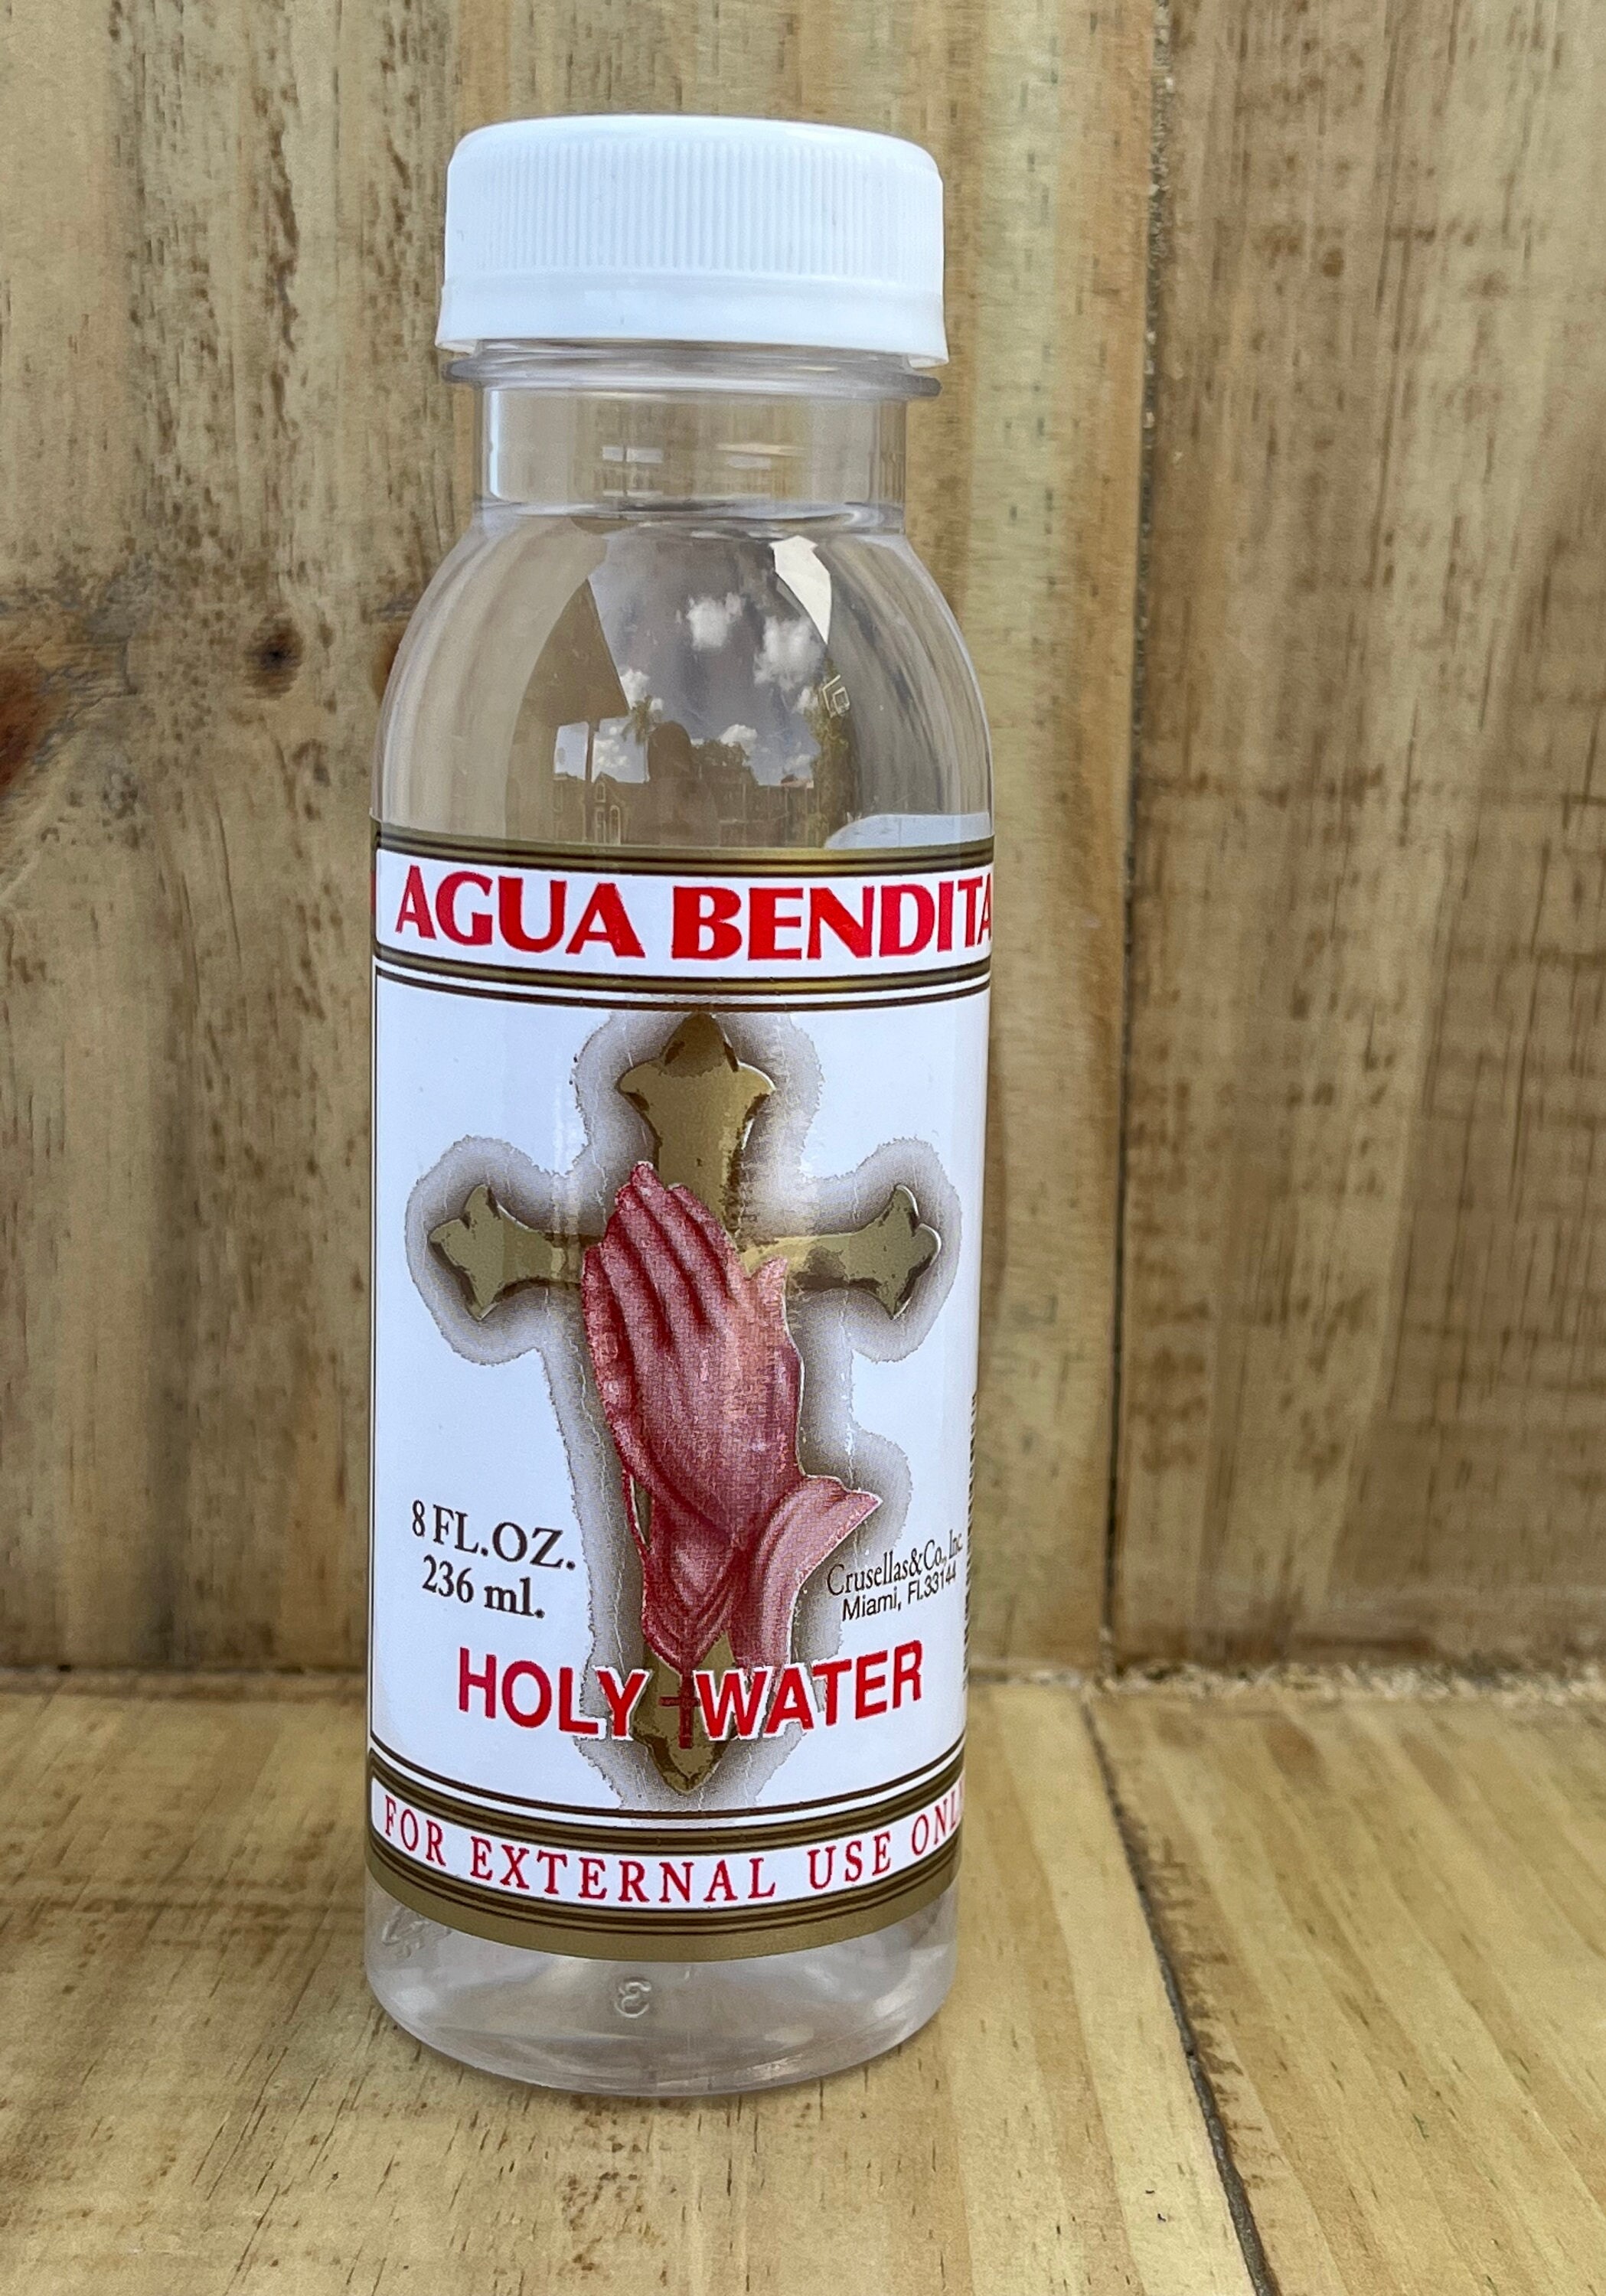 Crusellas and Co. Holy Water (Agua Bendita) 8 fl oz